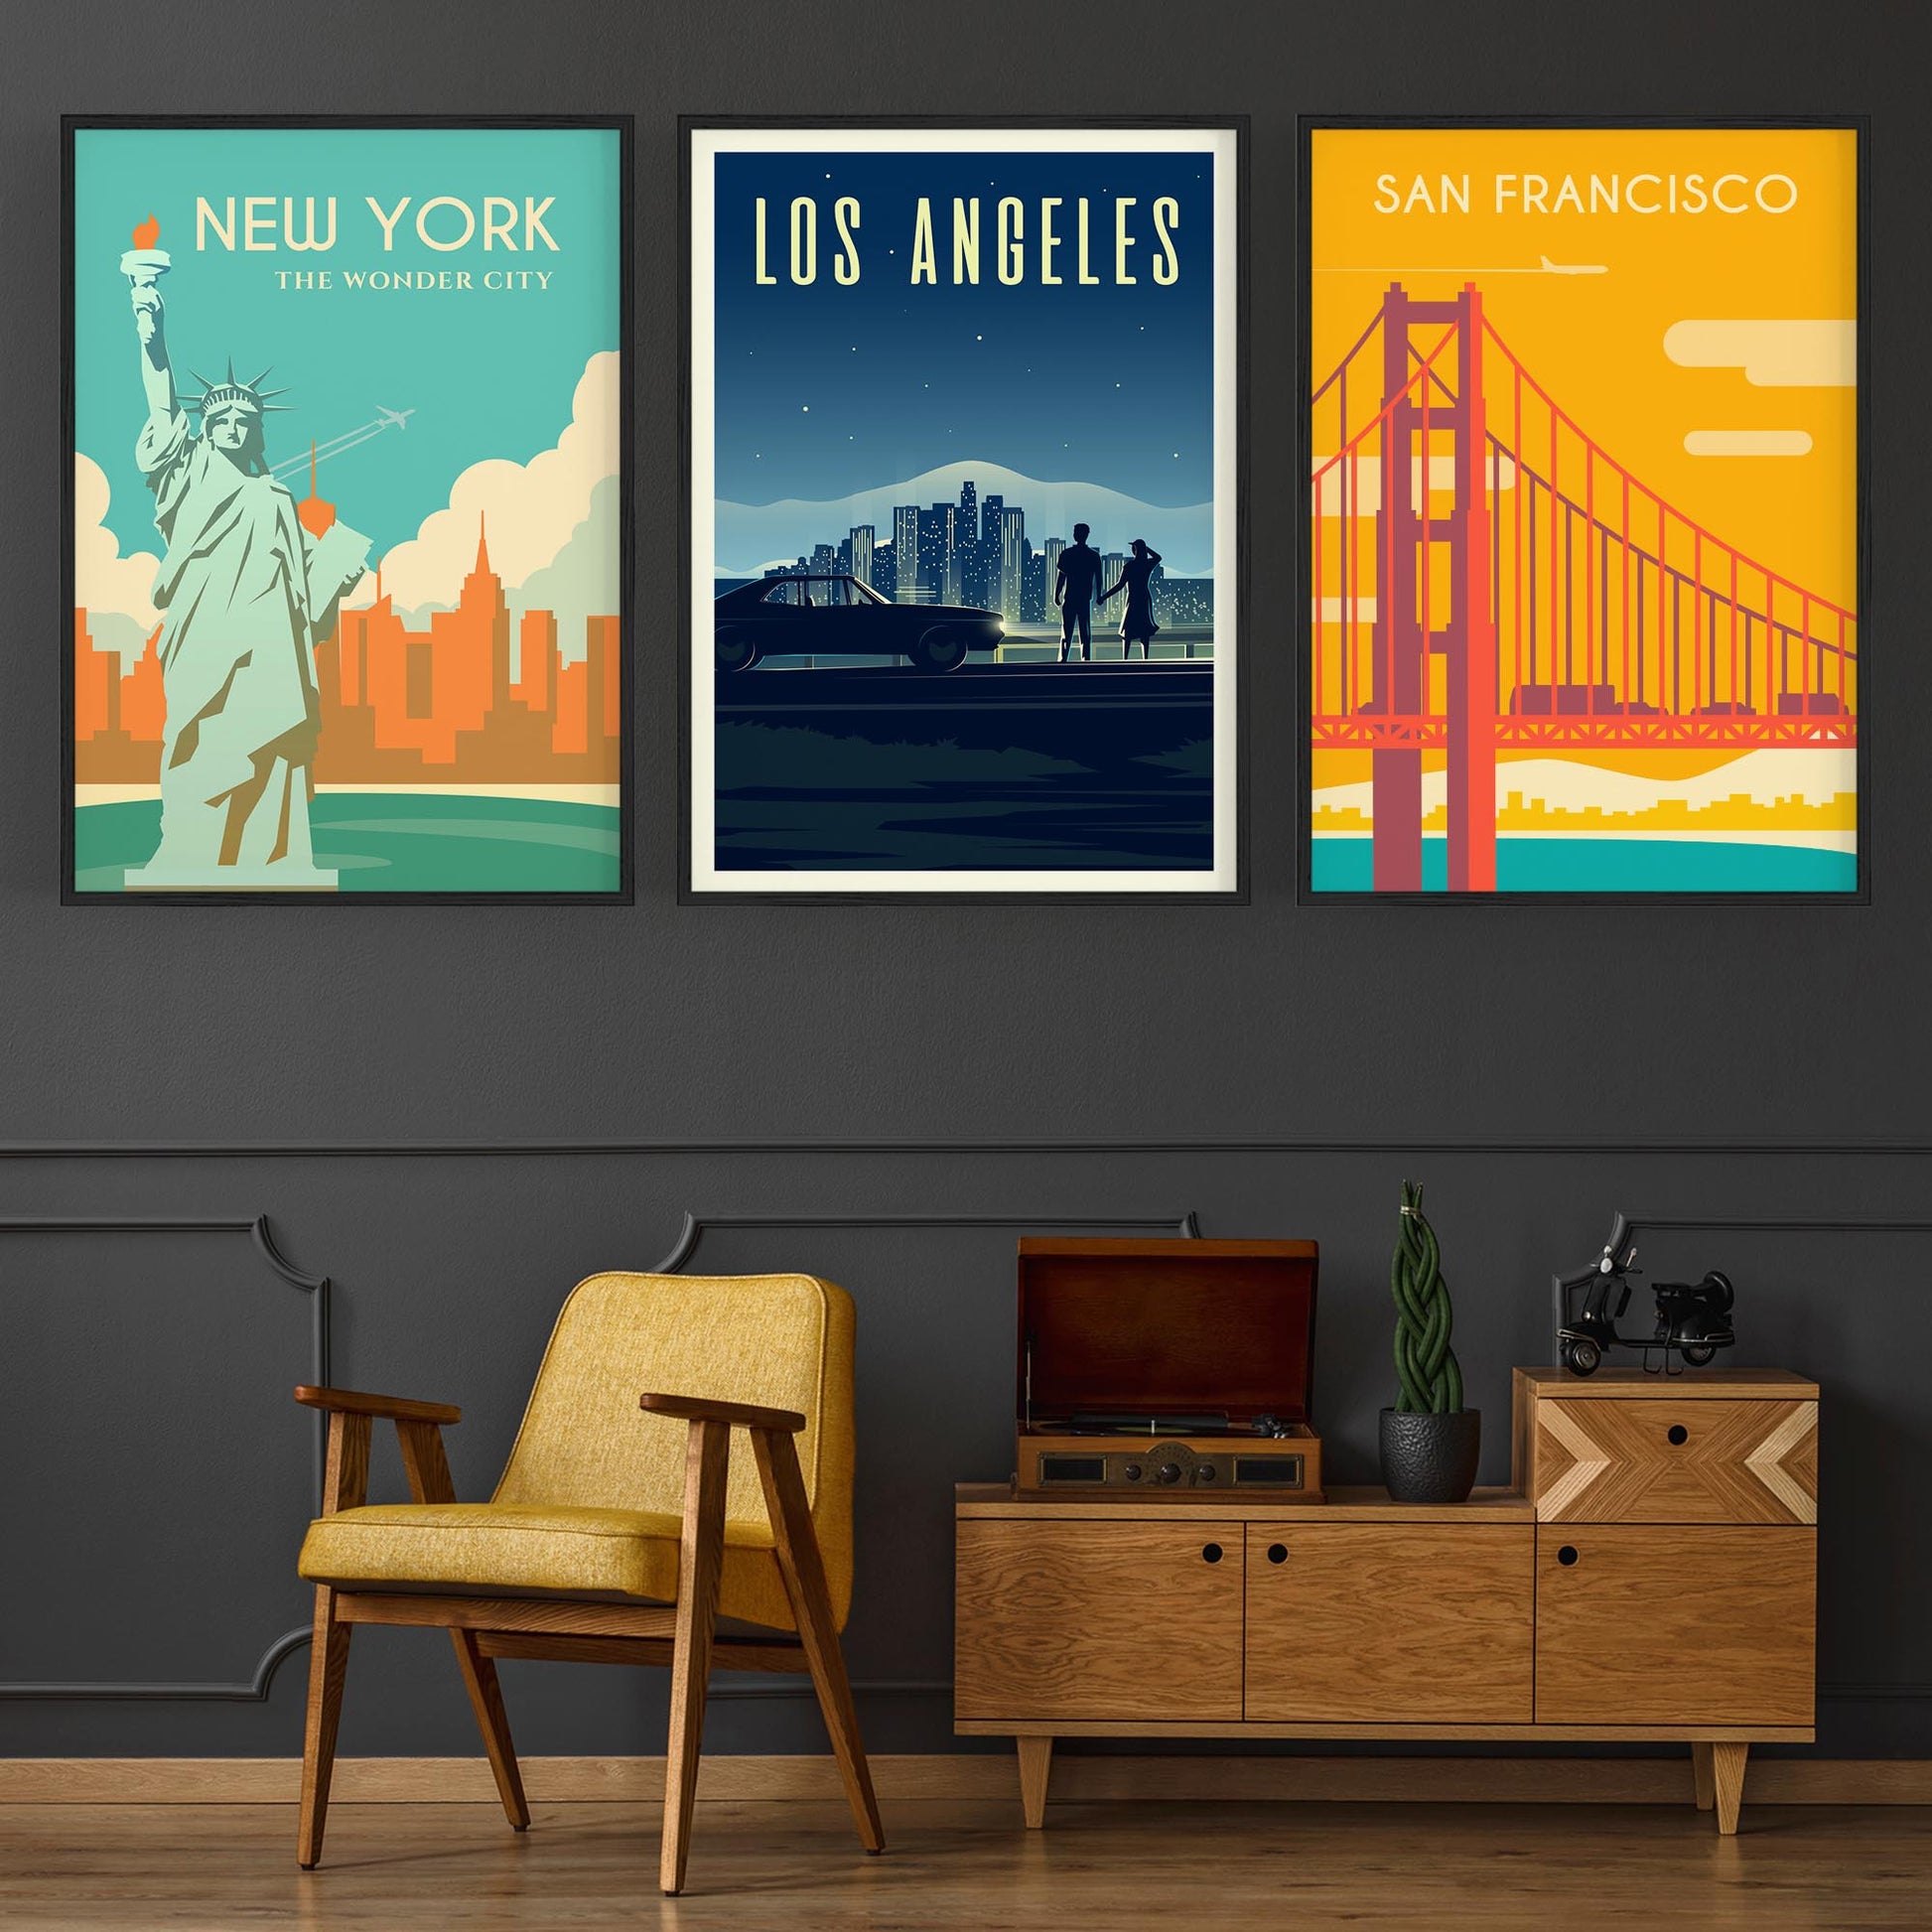 Set of Retro Travel Wall Art (USA Travel) - The Affordable Art Company